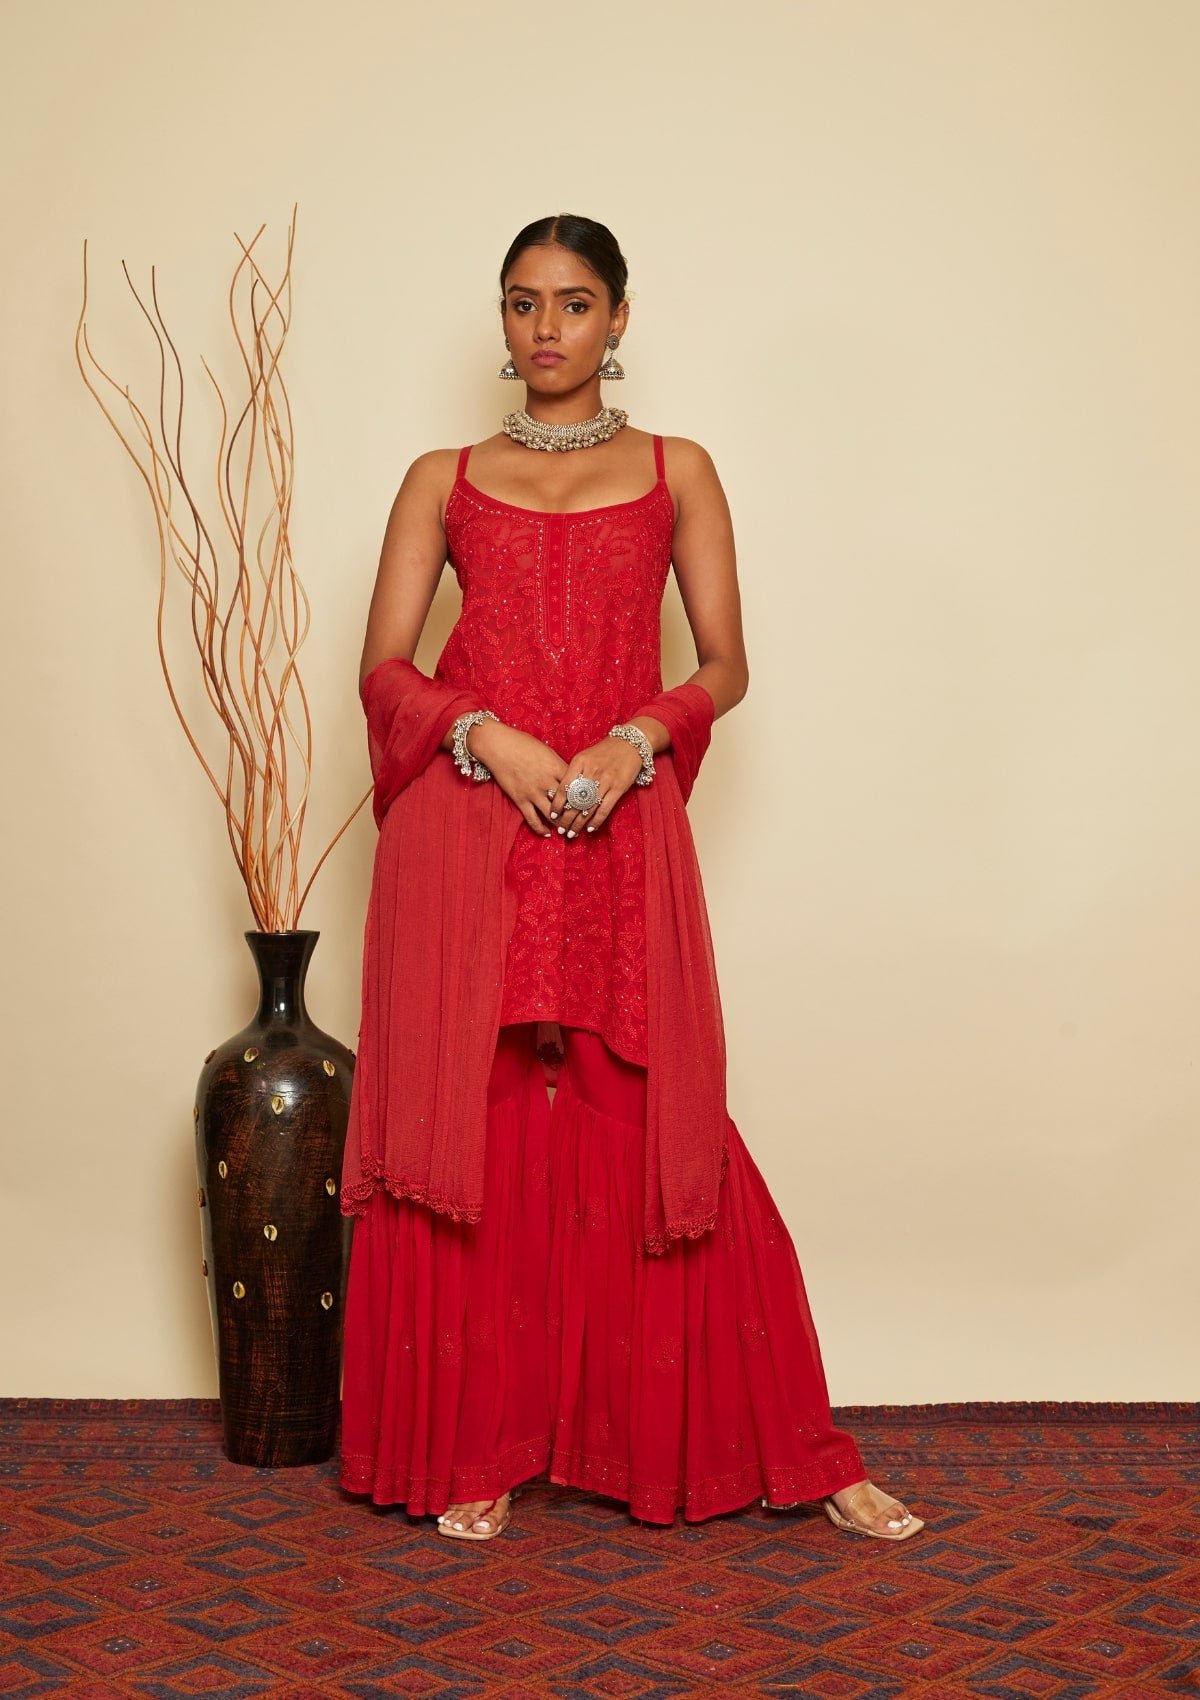 Shruti Haasan displays funky, yet Indian fashion | India Forums